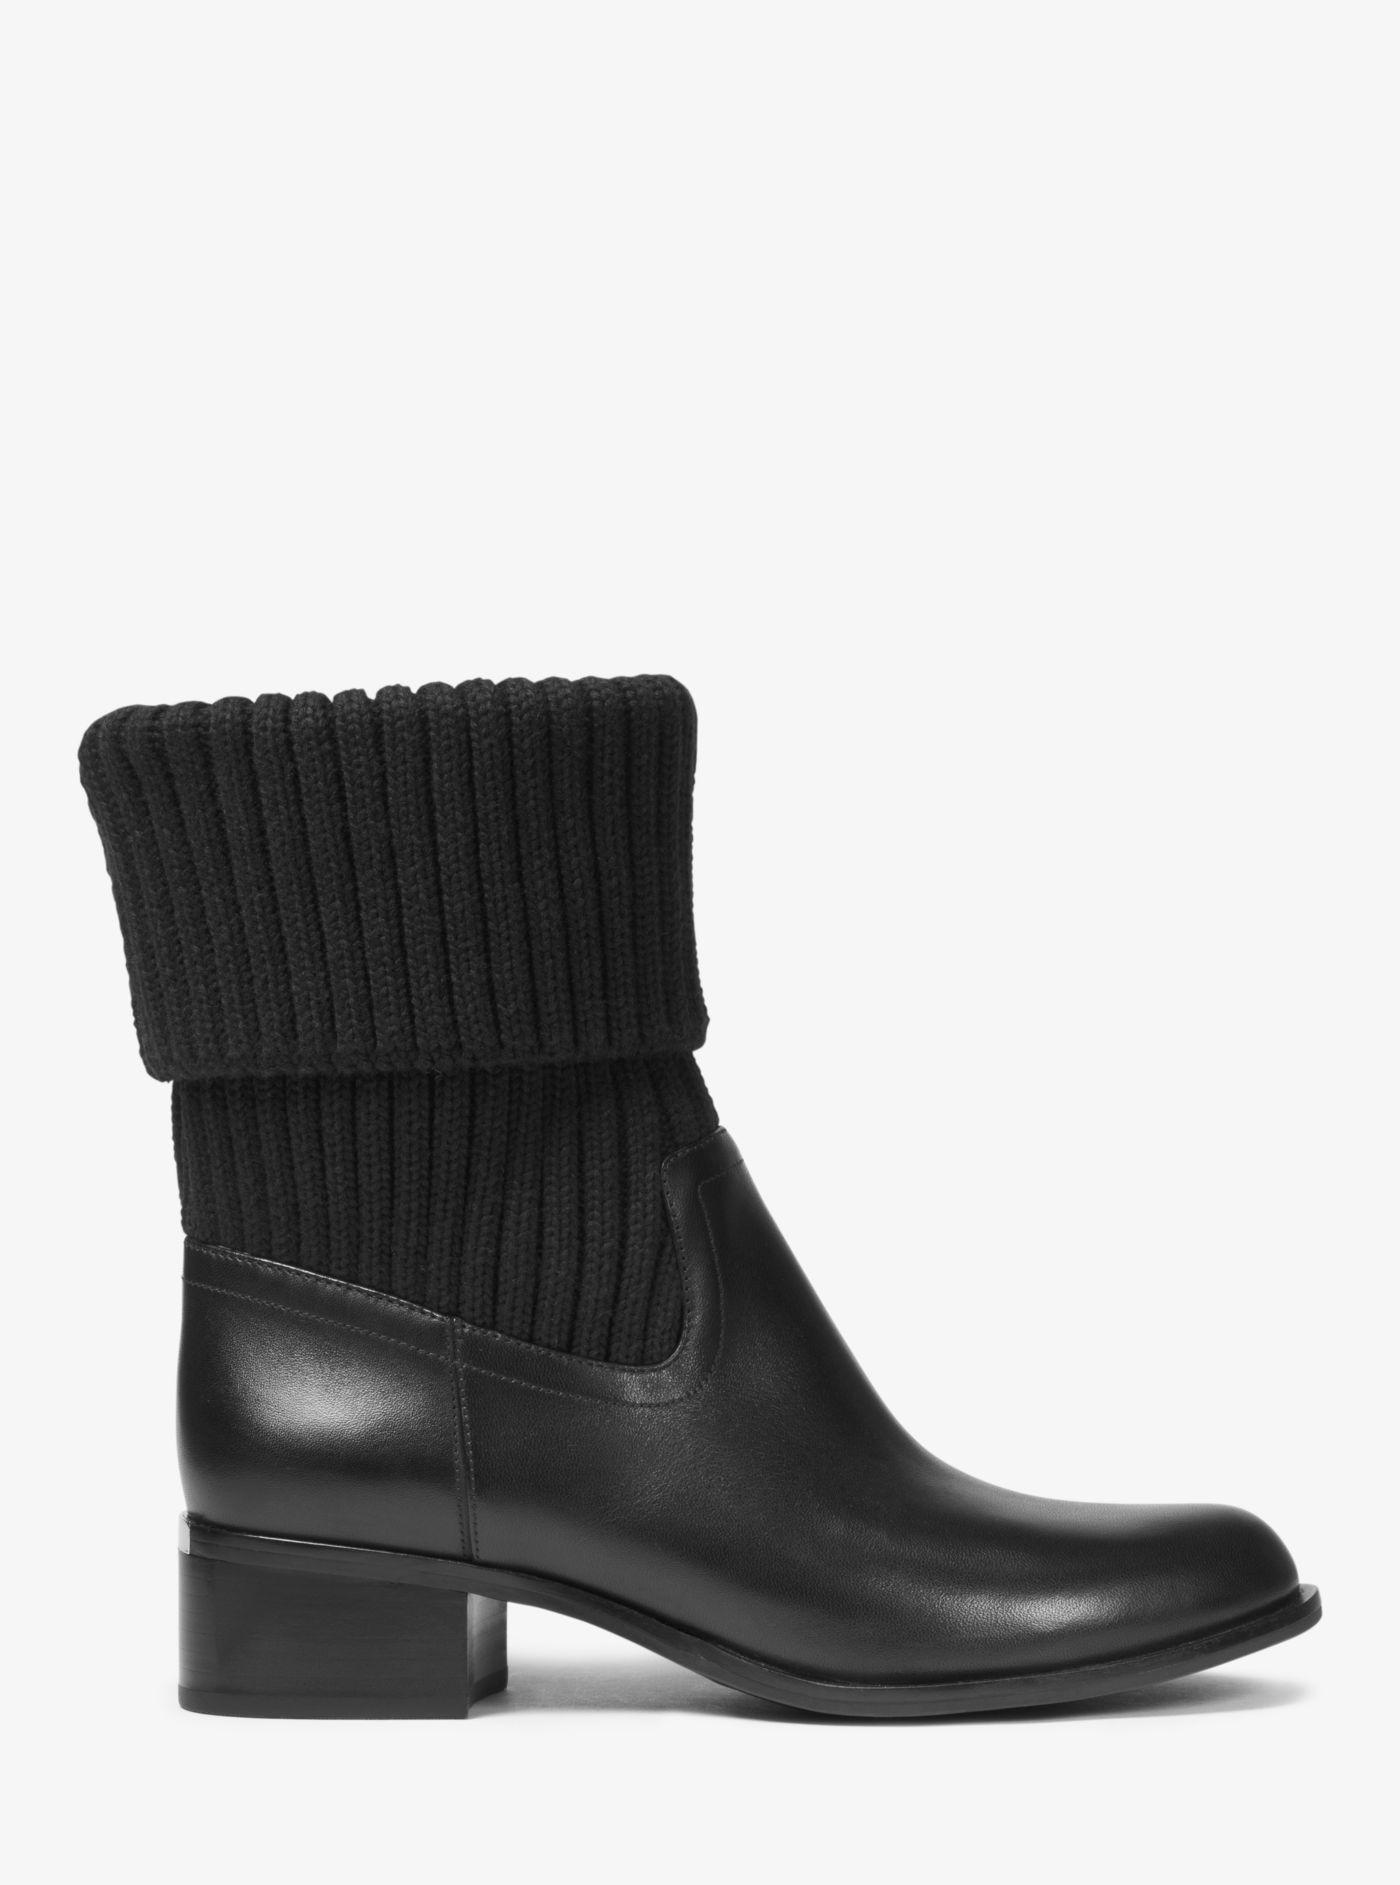 ugg australia black boots